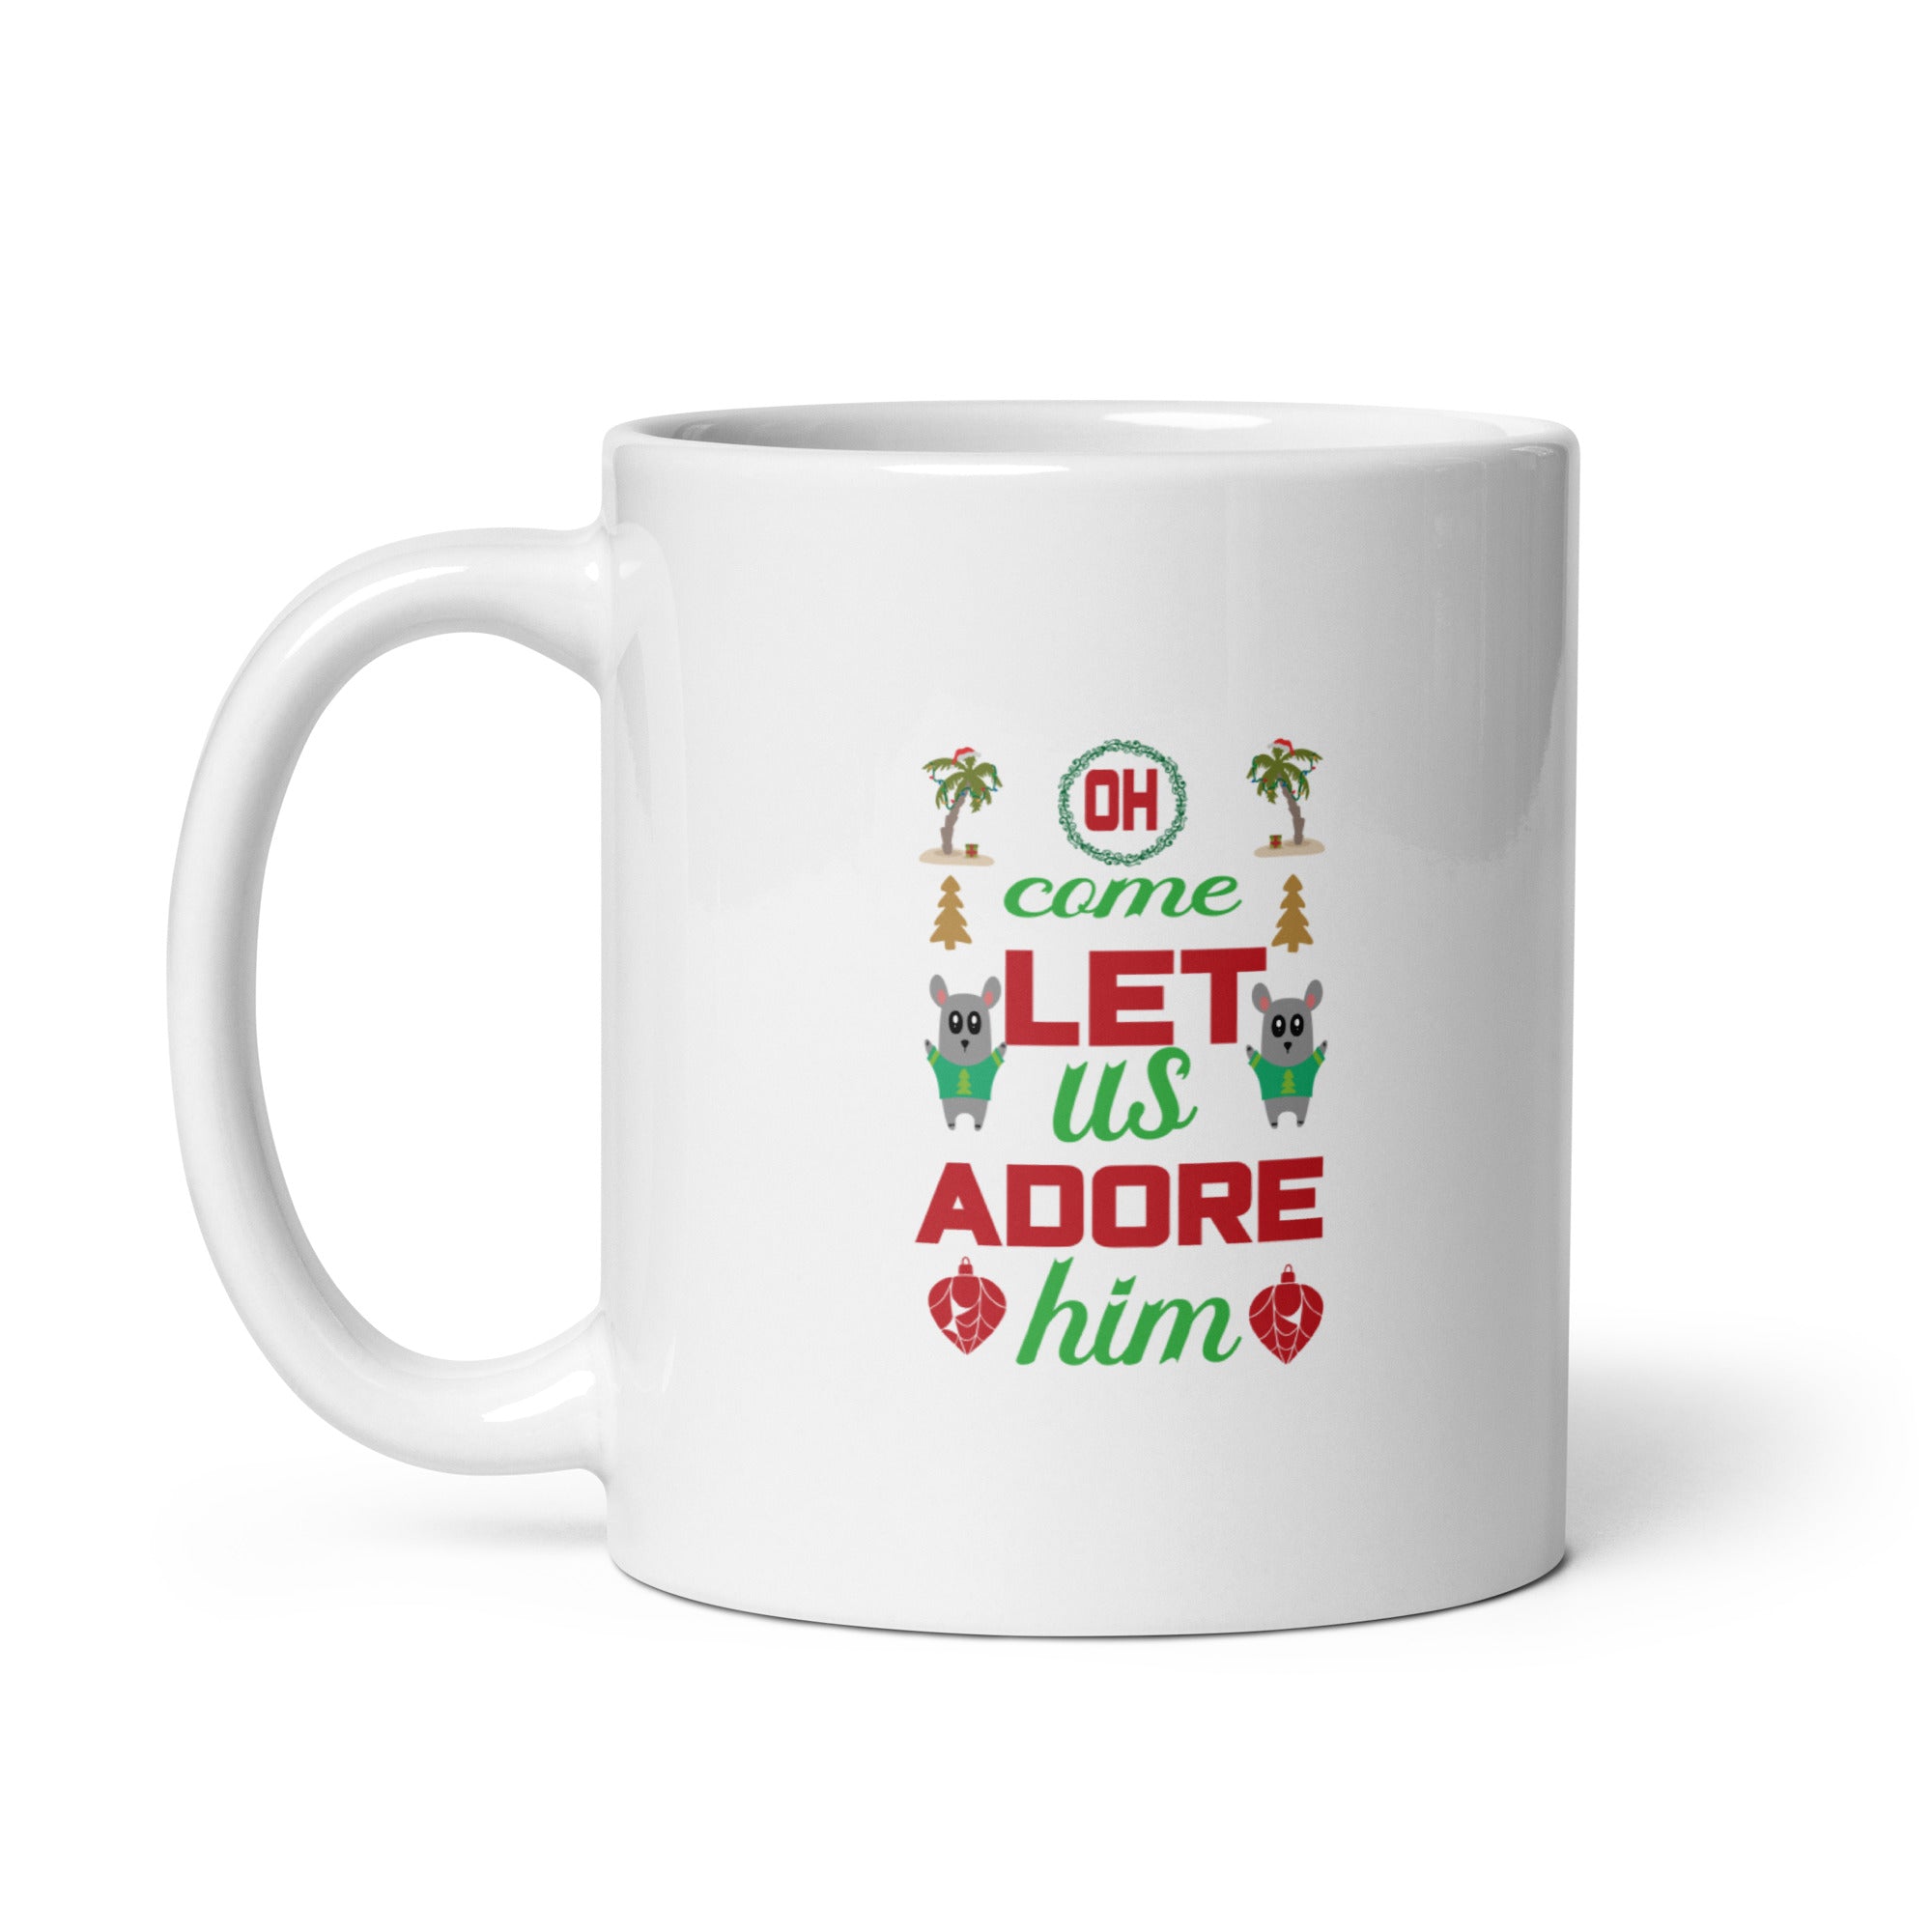 Let Us Adore Him - White glossy mug